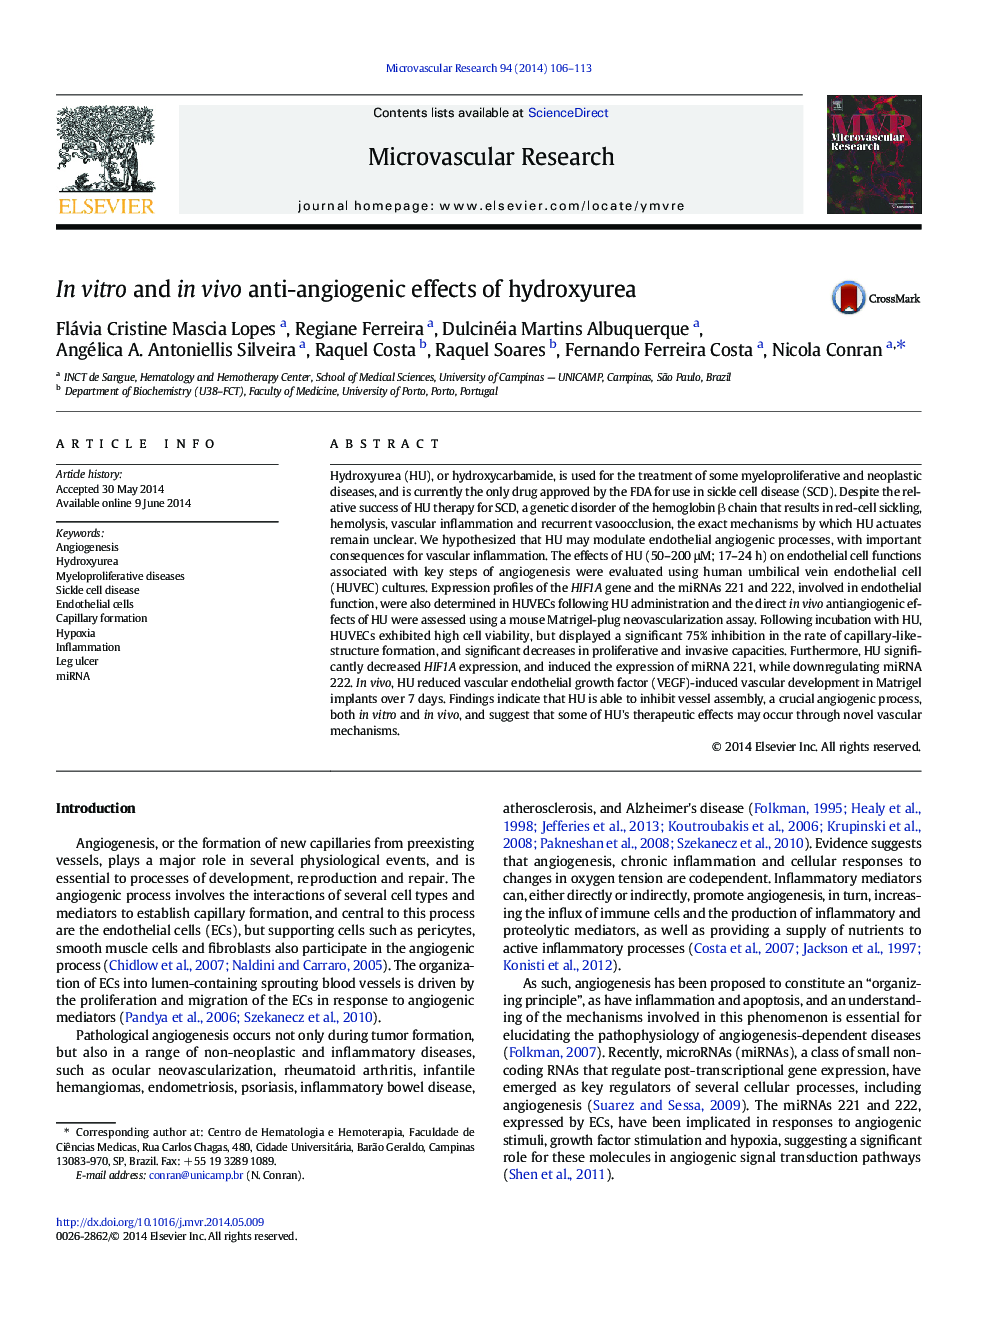 In vitro and in vivo anti-angiogenic effects of hydroxyurea